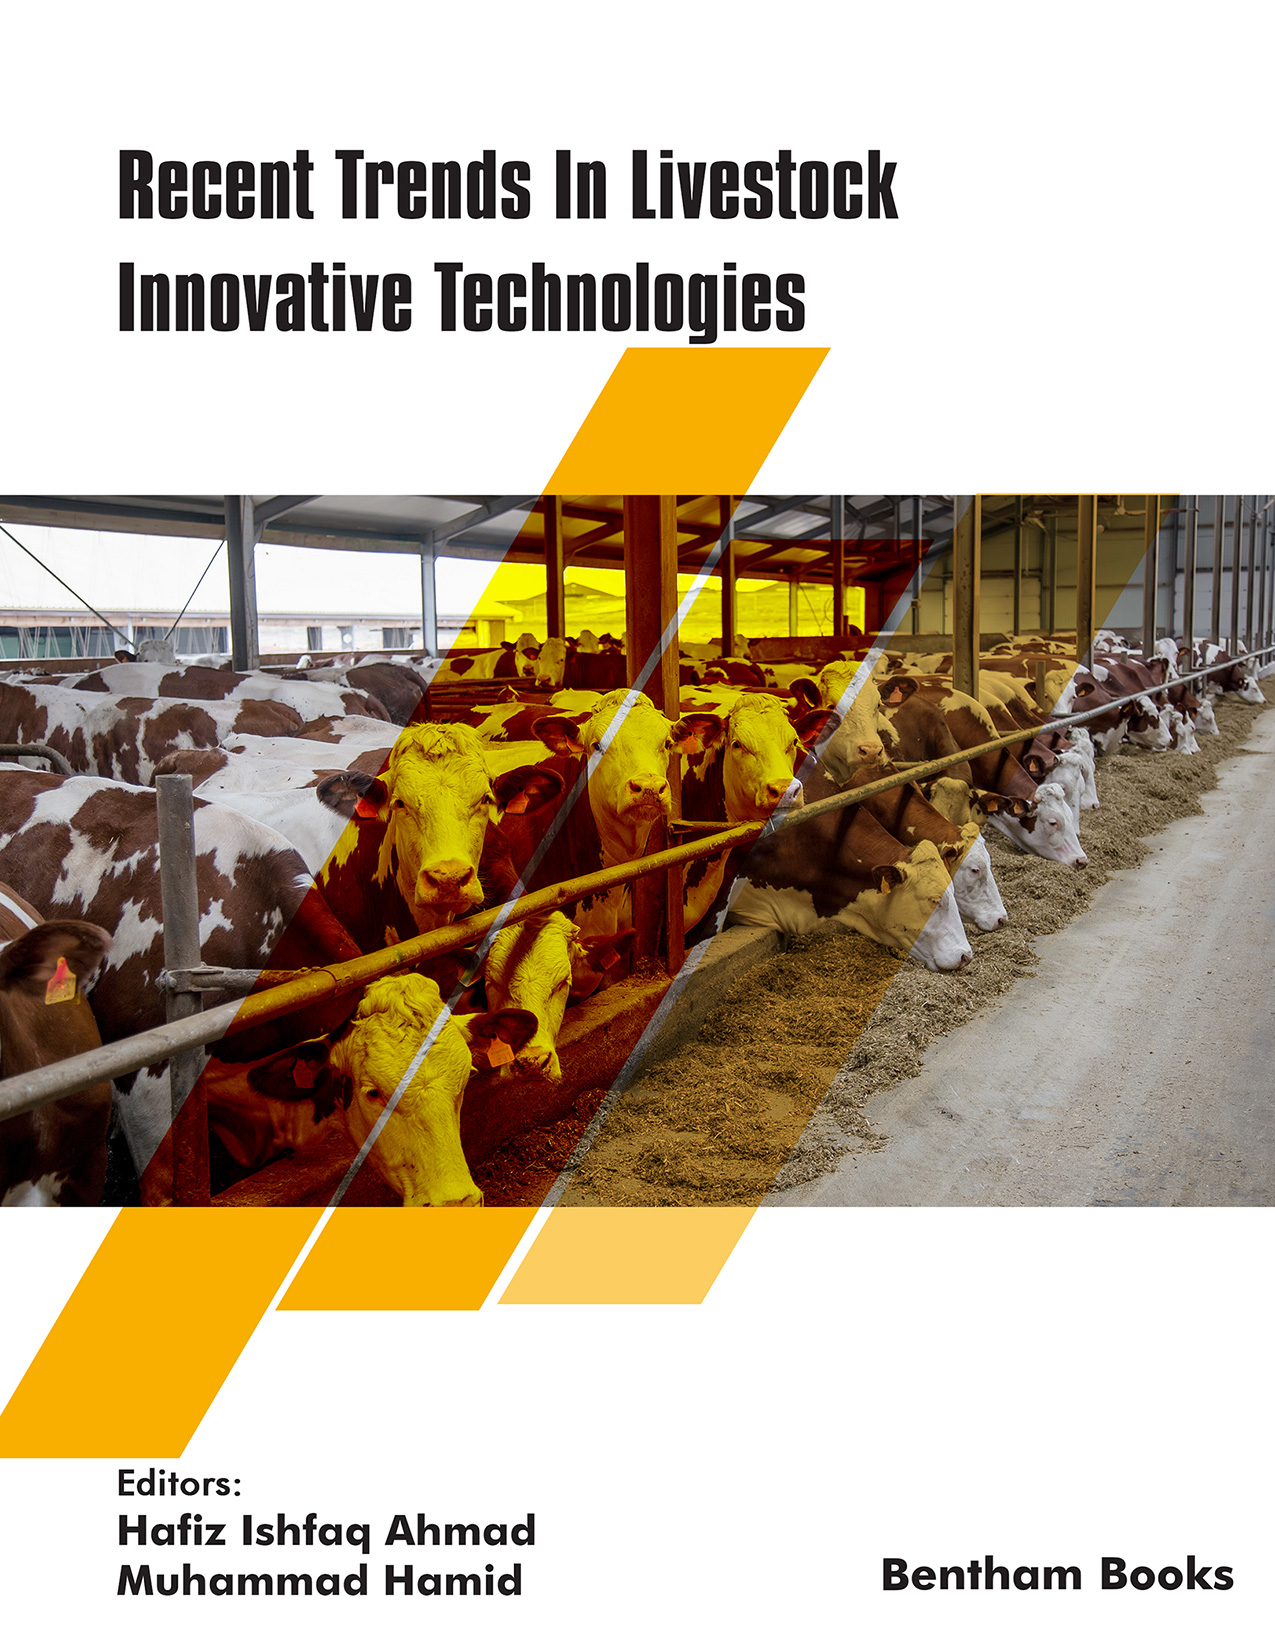 Recent Trends In Livestock Innovative Technologies